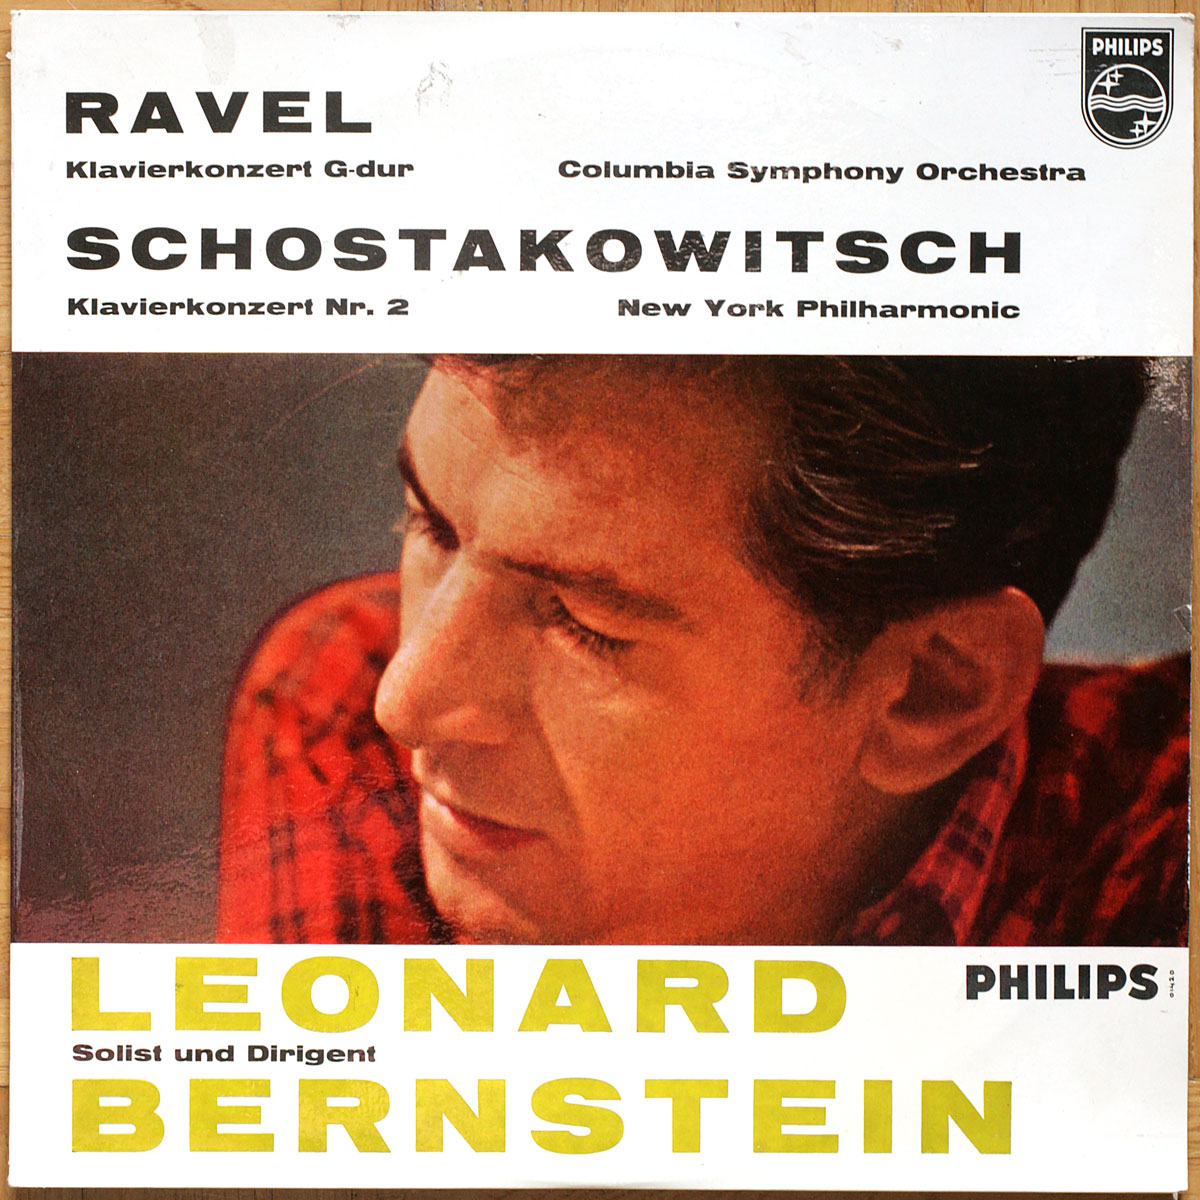 Ravel – Concerto pour piano • Shostakovich – Concerto pour piano nº 2 • Philips A 01420 L • Columbia Symphony Orchestra – New York Philharmonic • Leonard Bernstein